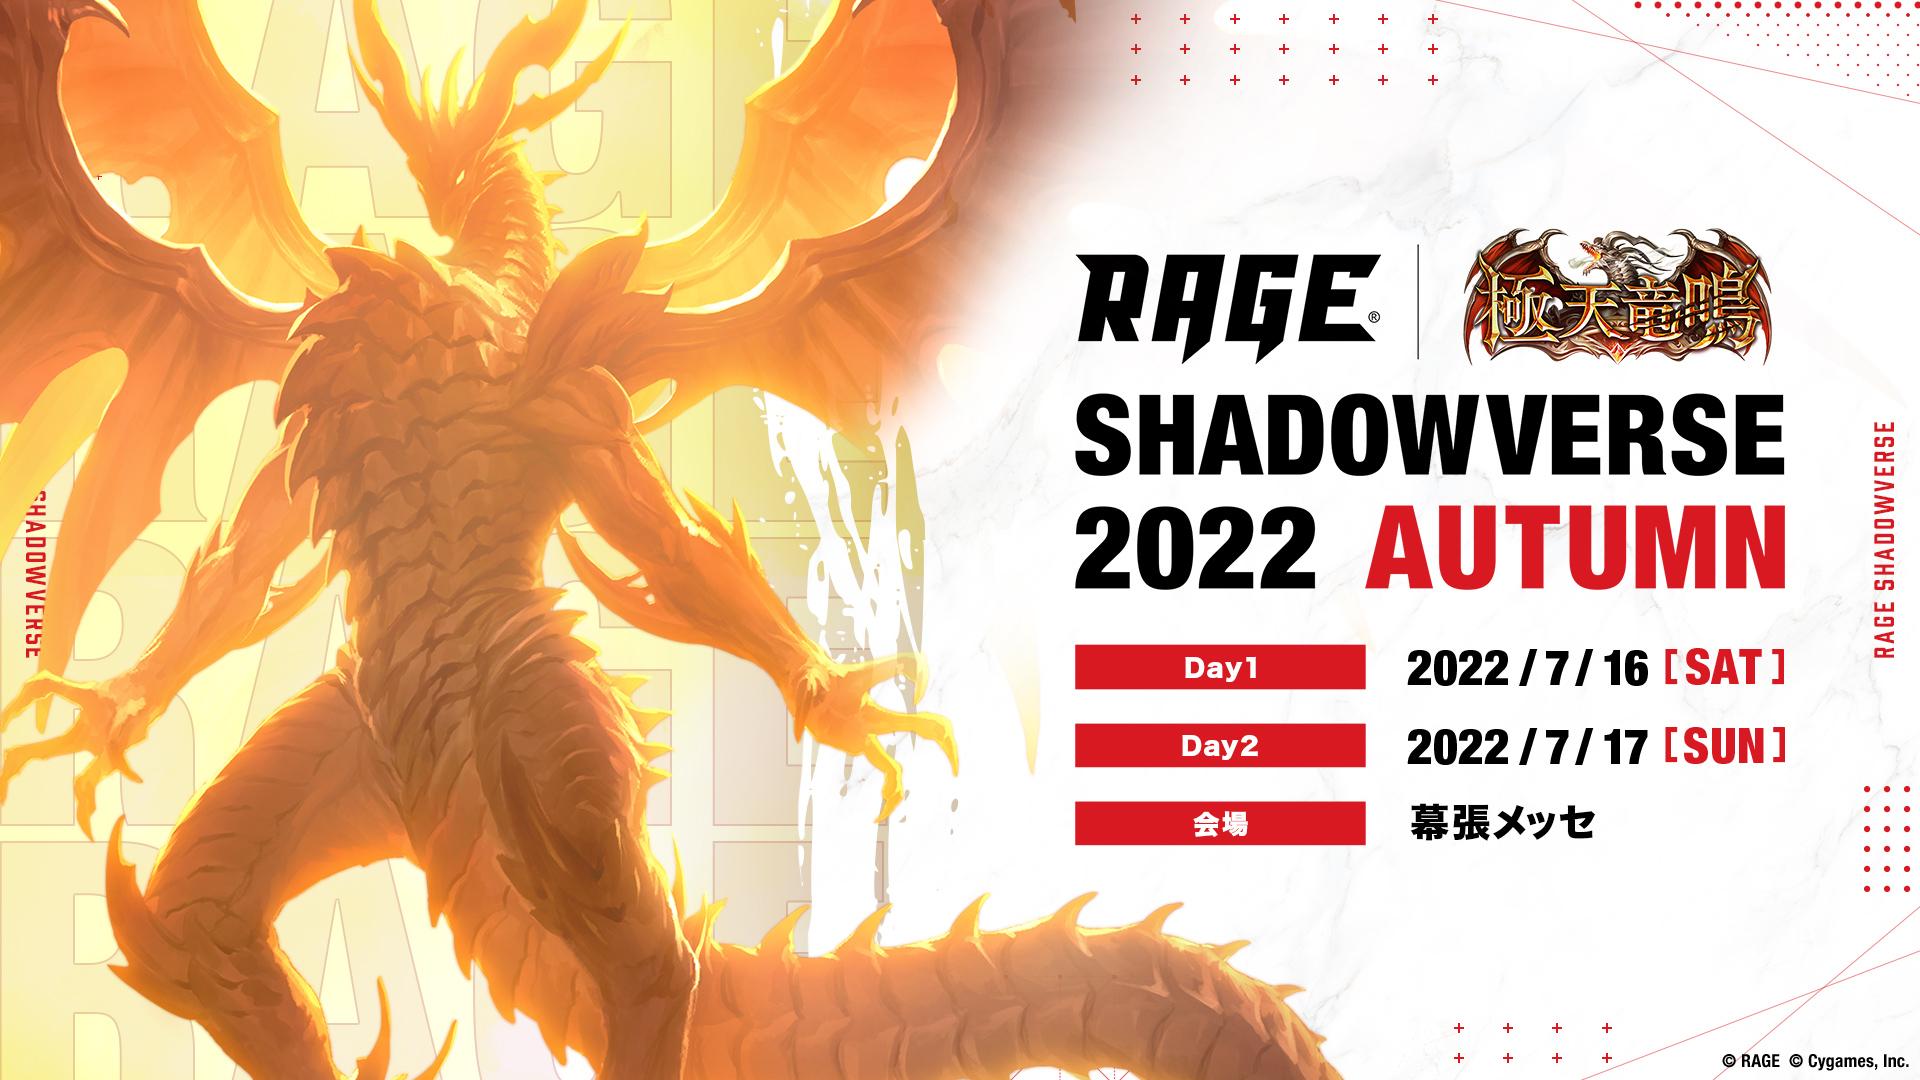 RAGE Shadowverse 2022 Autumn feature image